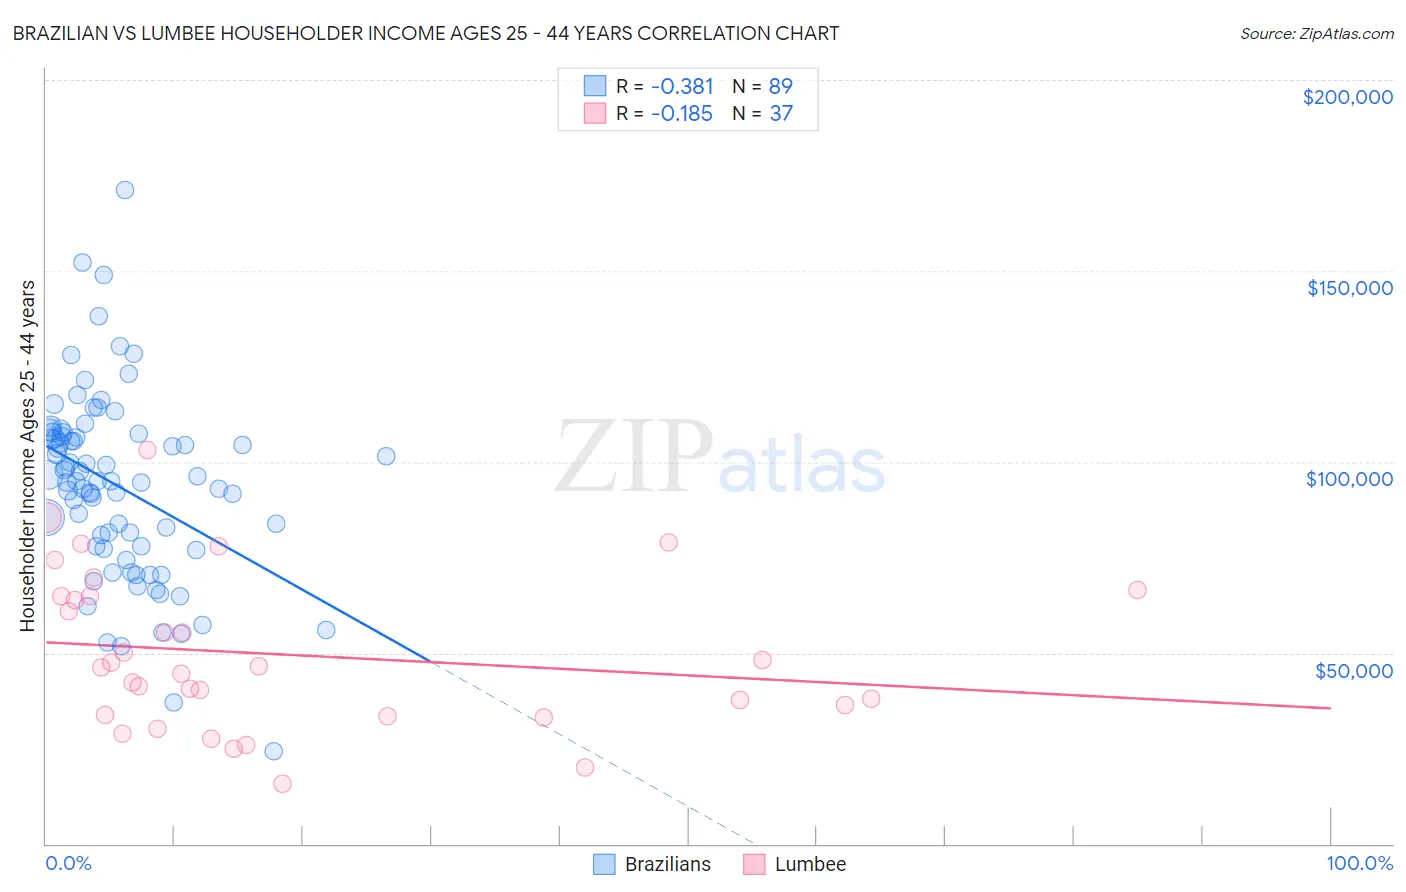 Brazilian vs Lumbee Householder Income Ages 25 - 44 years